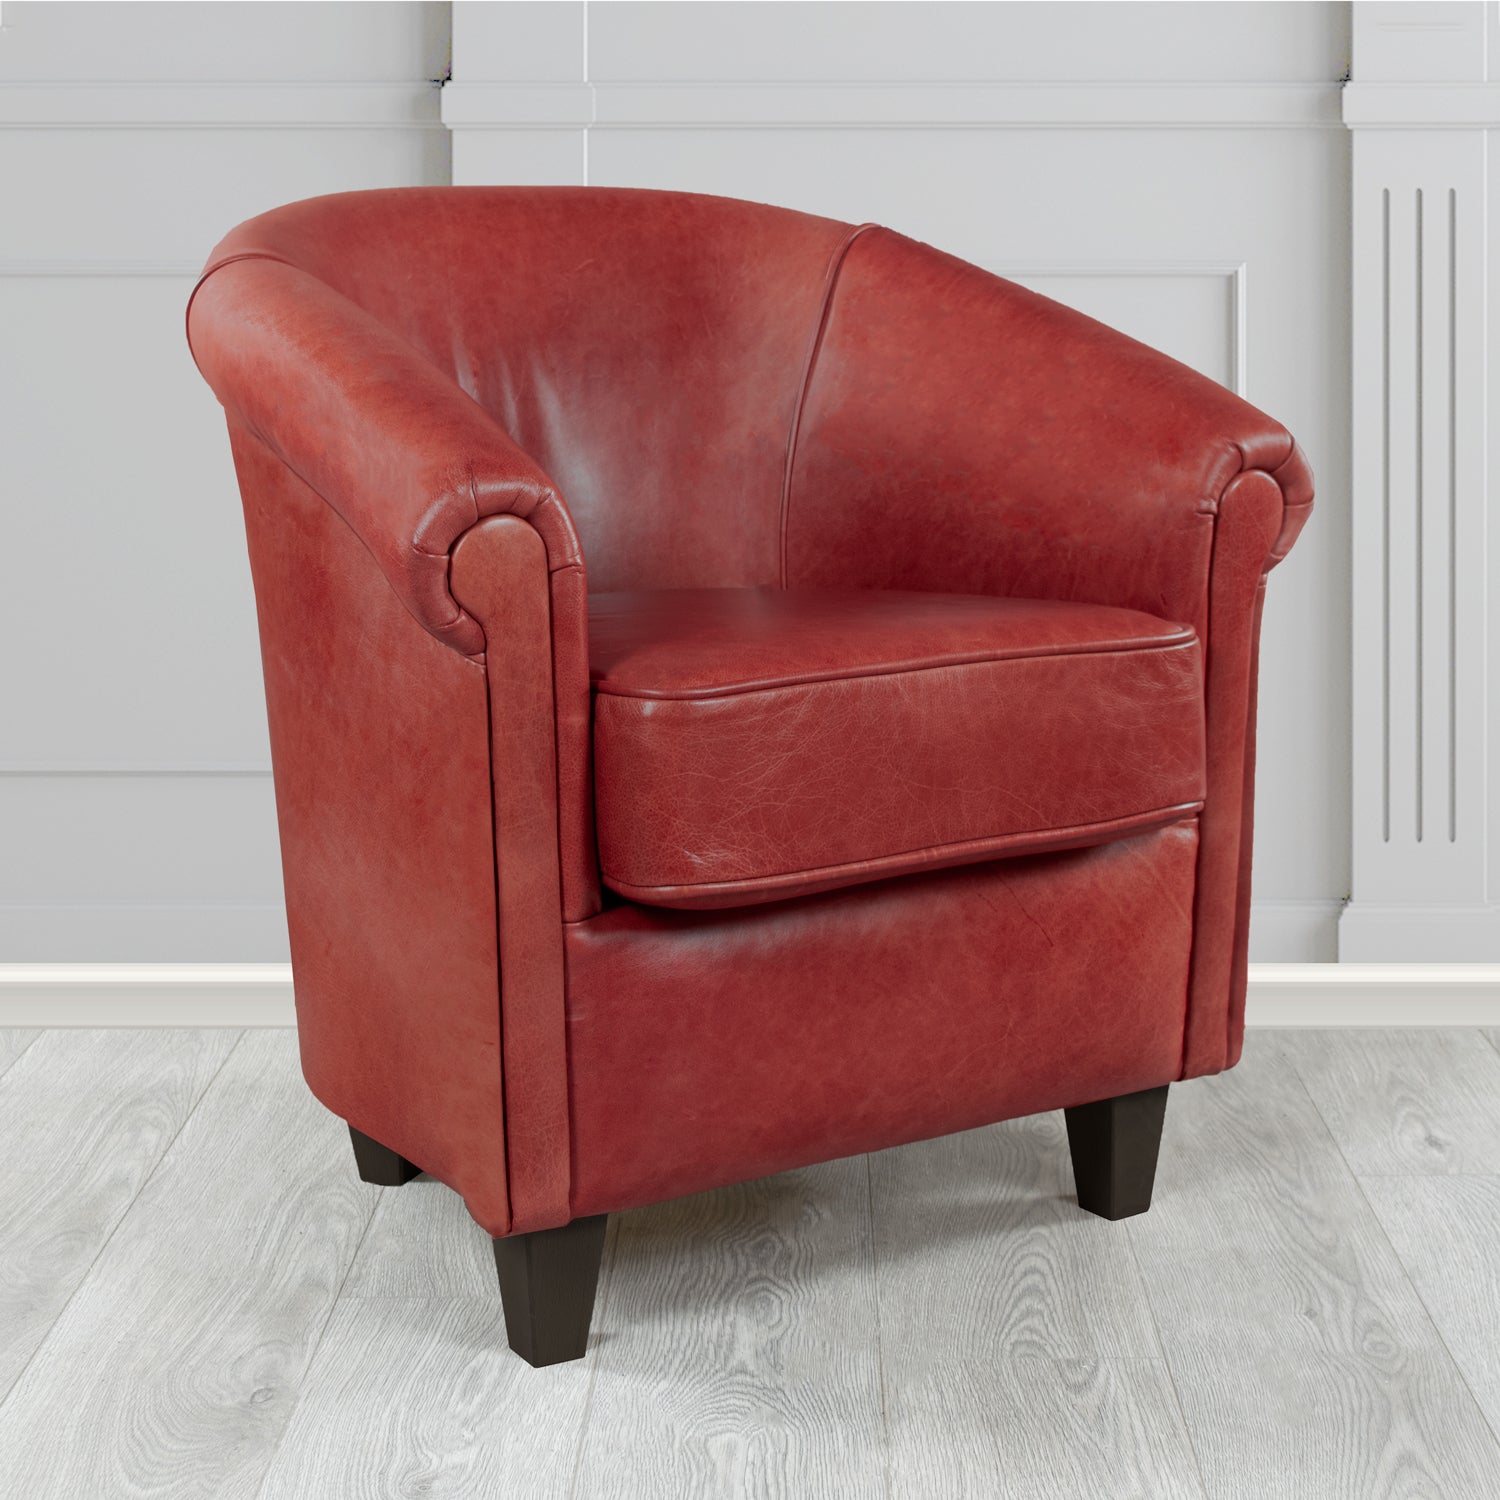 Siena Crib 5 Old English Chestnut Genuine Leather Tub Chair (4683624120362)